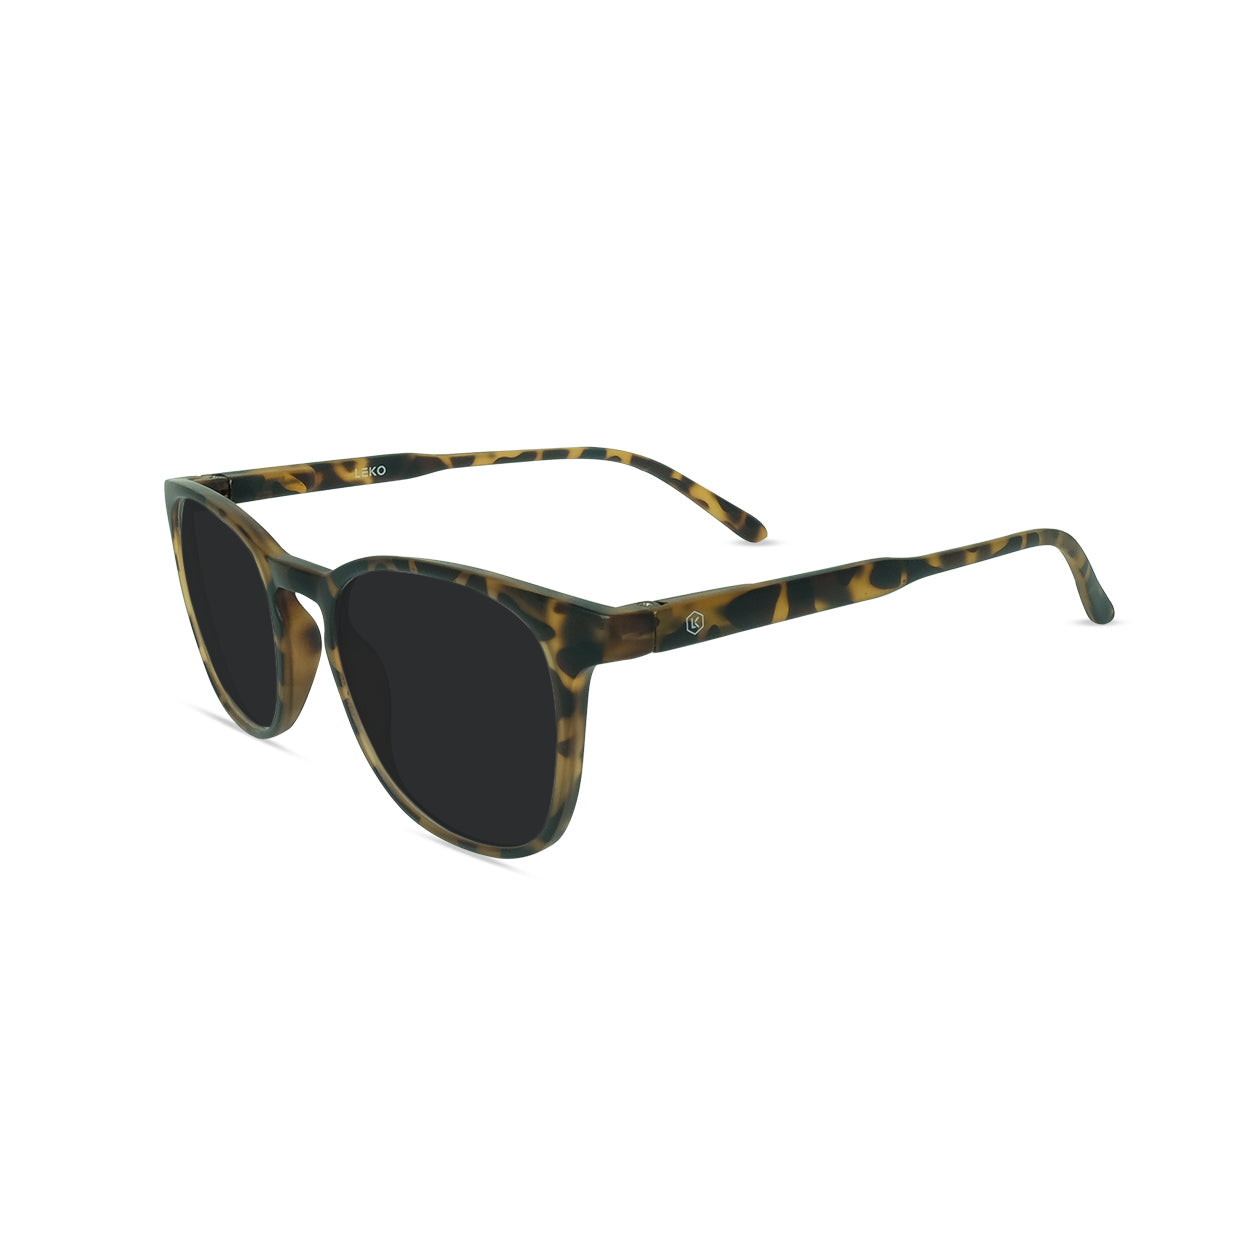 Fashionable Glasses in Tortoise / Sun